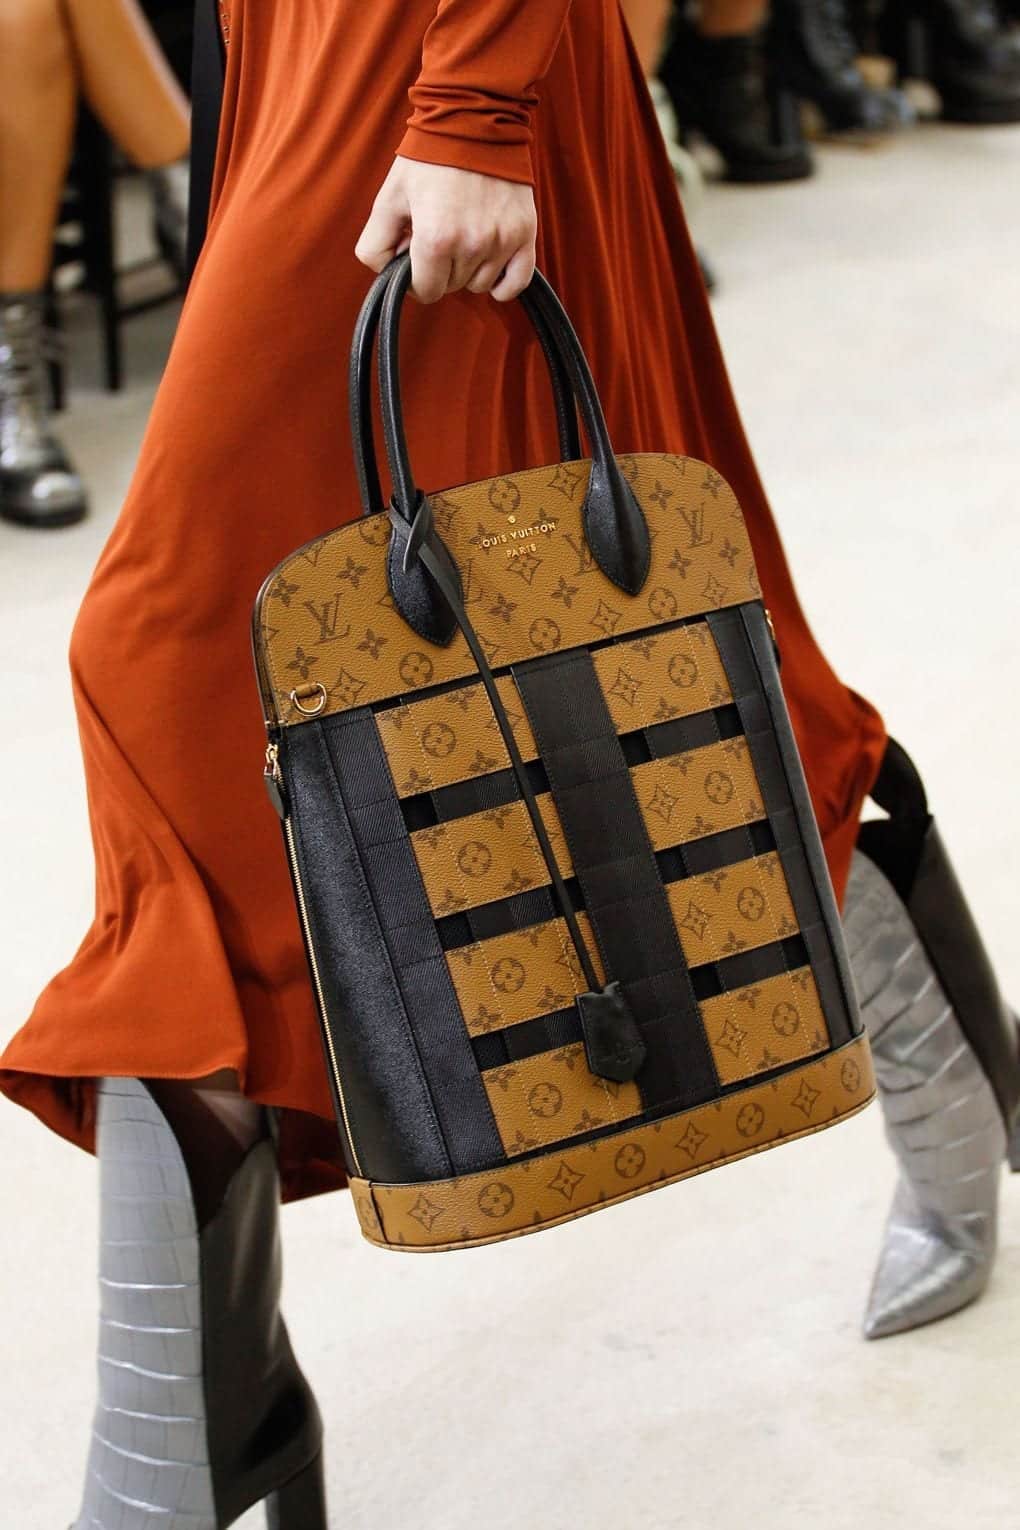 Most Iconic Luxury Bags - Best Design Idea